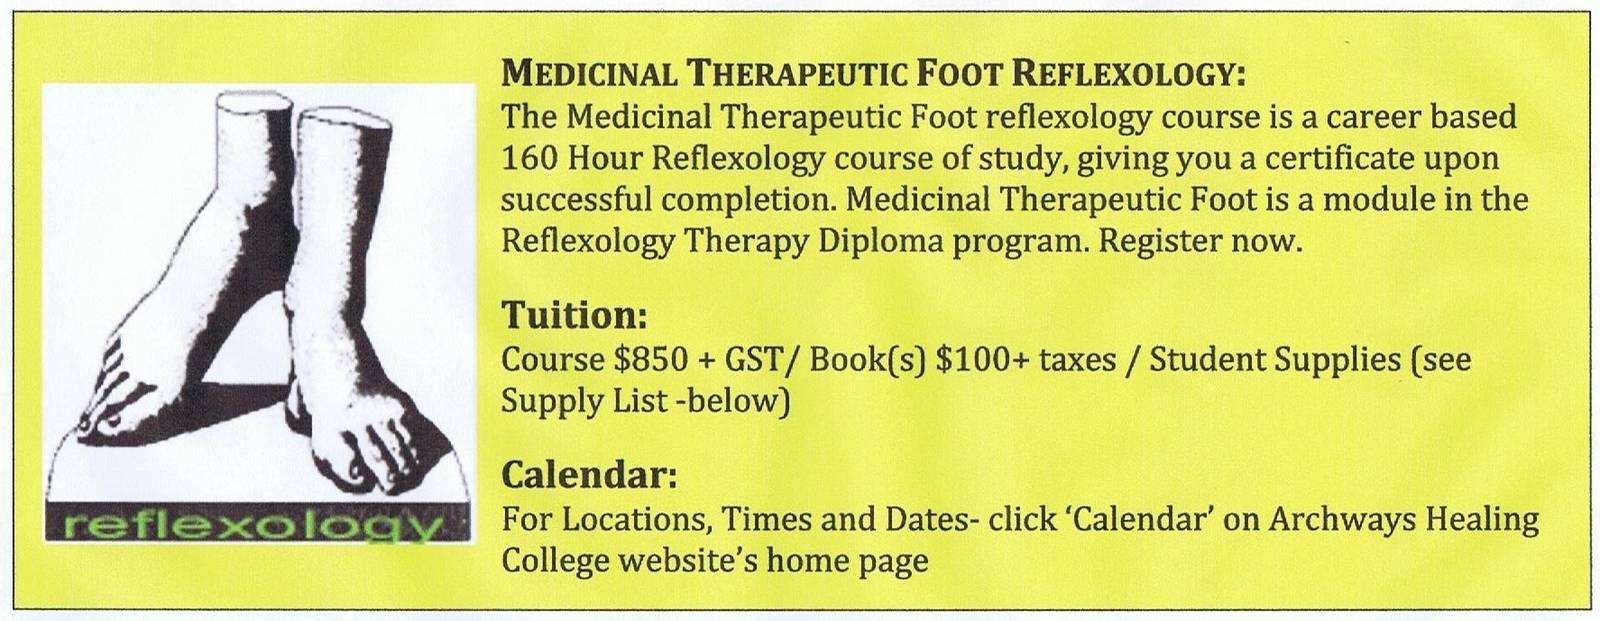 Information regarding Medicinal Therapeutic Foot Reflexology from Archways massage school in Alberta